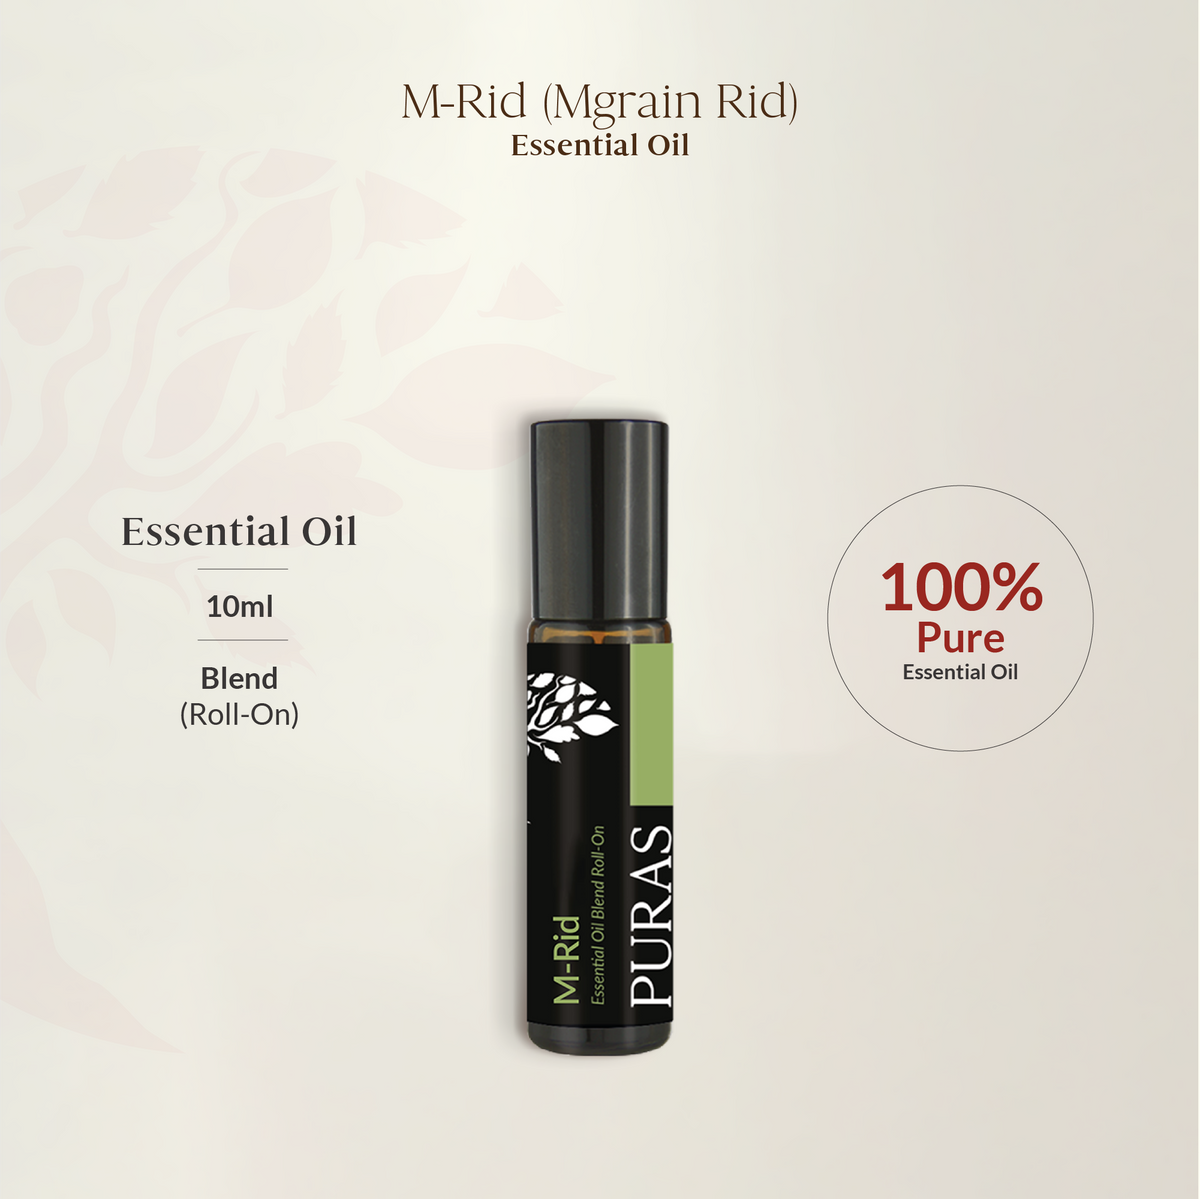 M-Rid Essential Oil Blend (Roll-On) 10ml